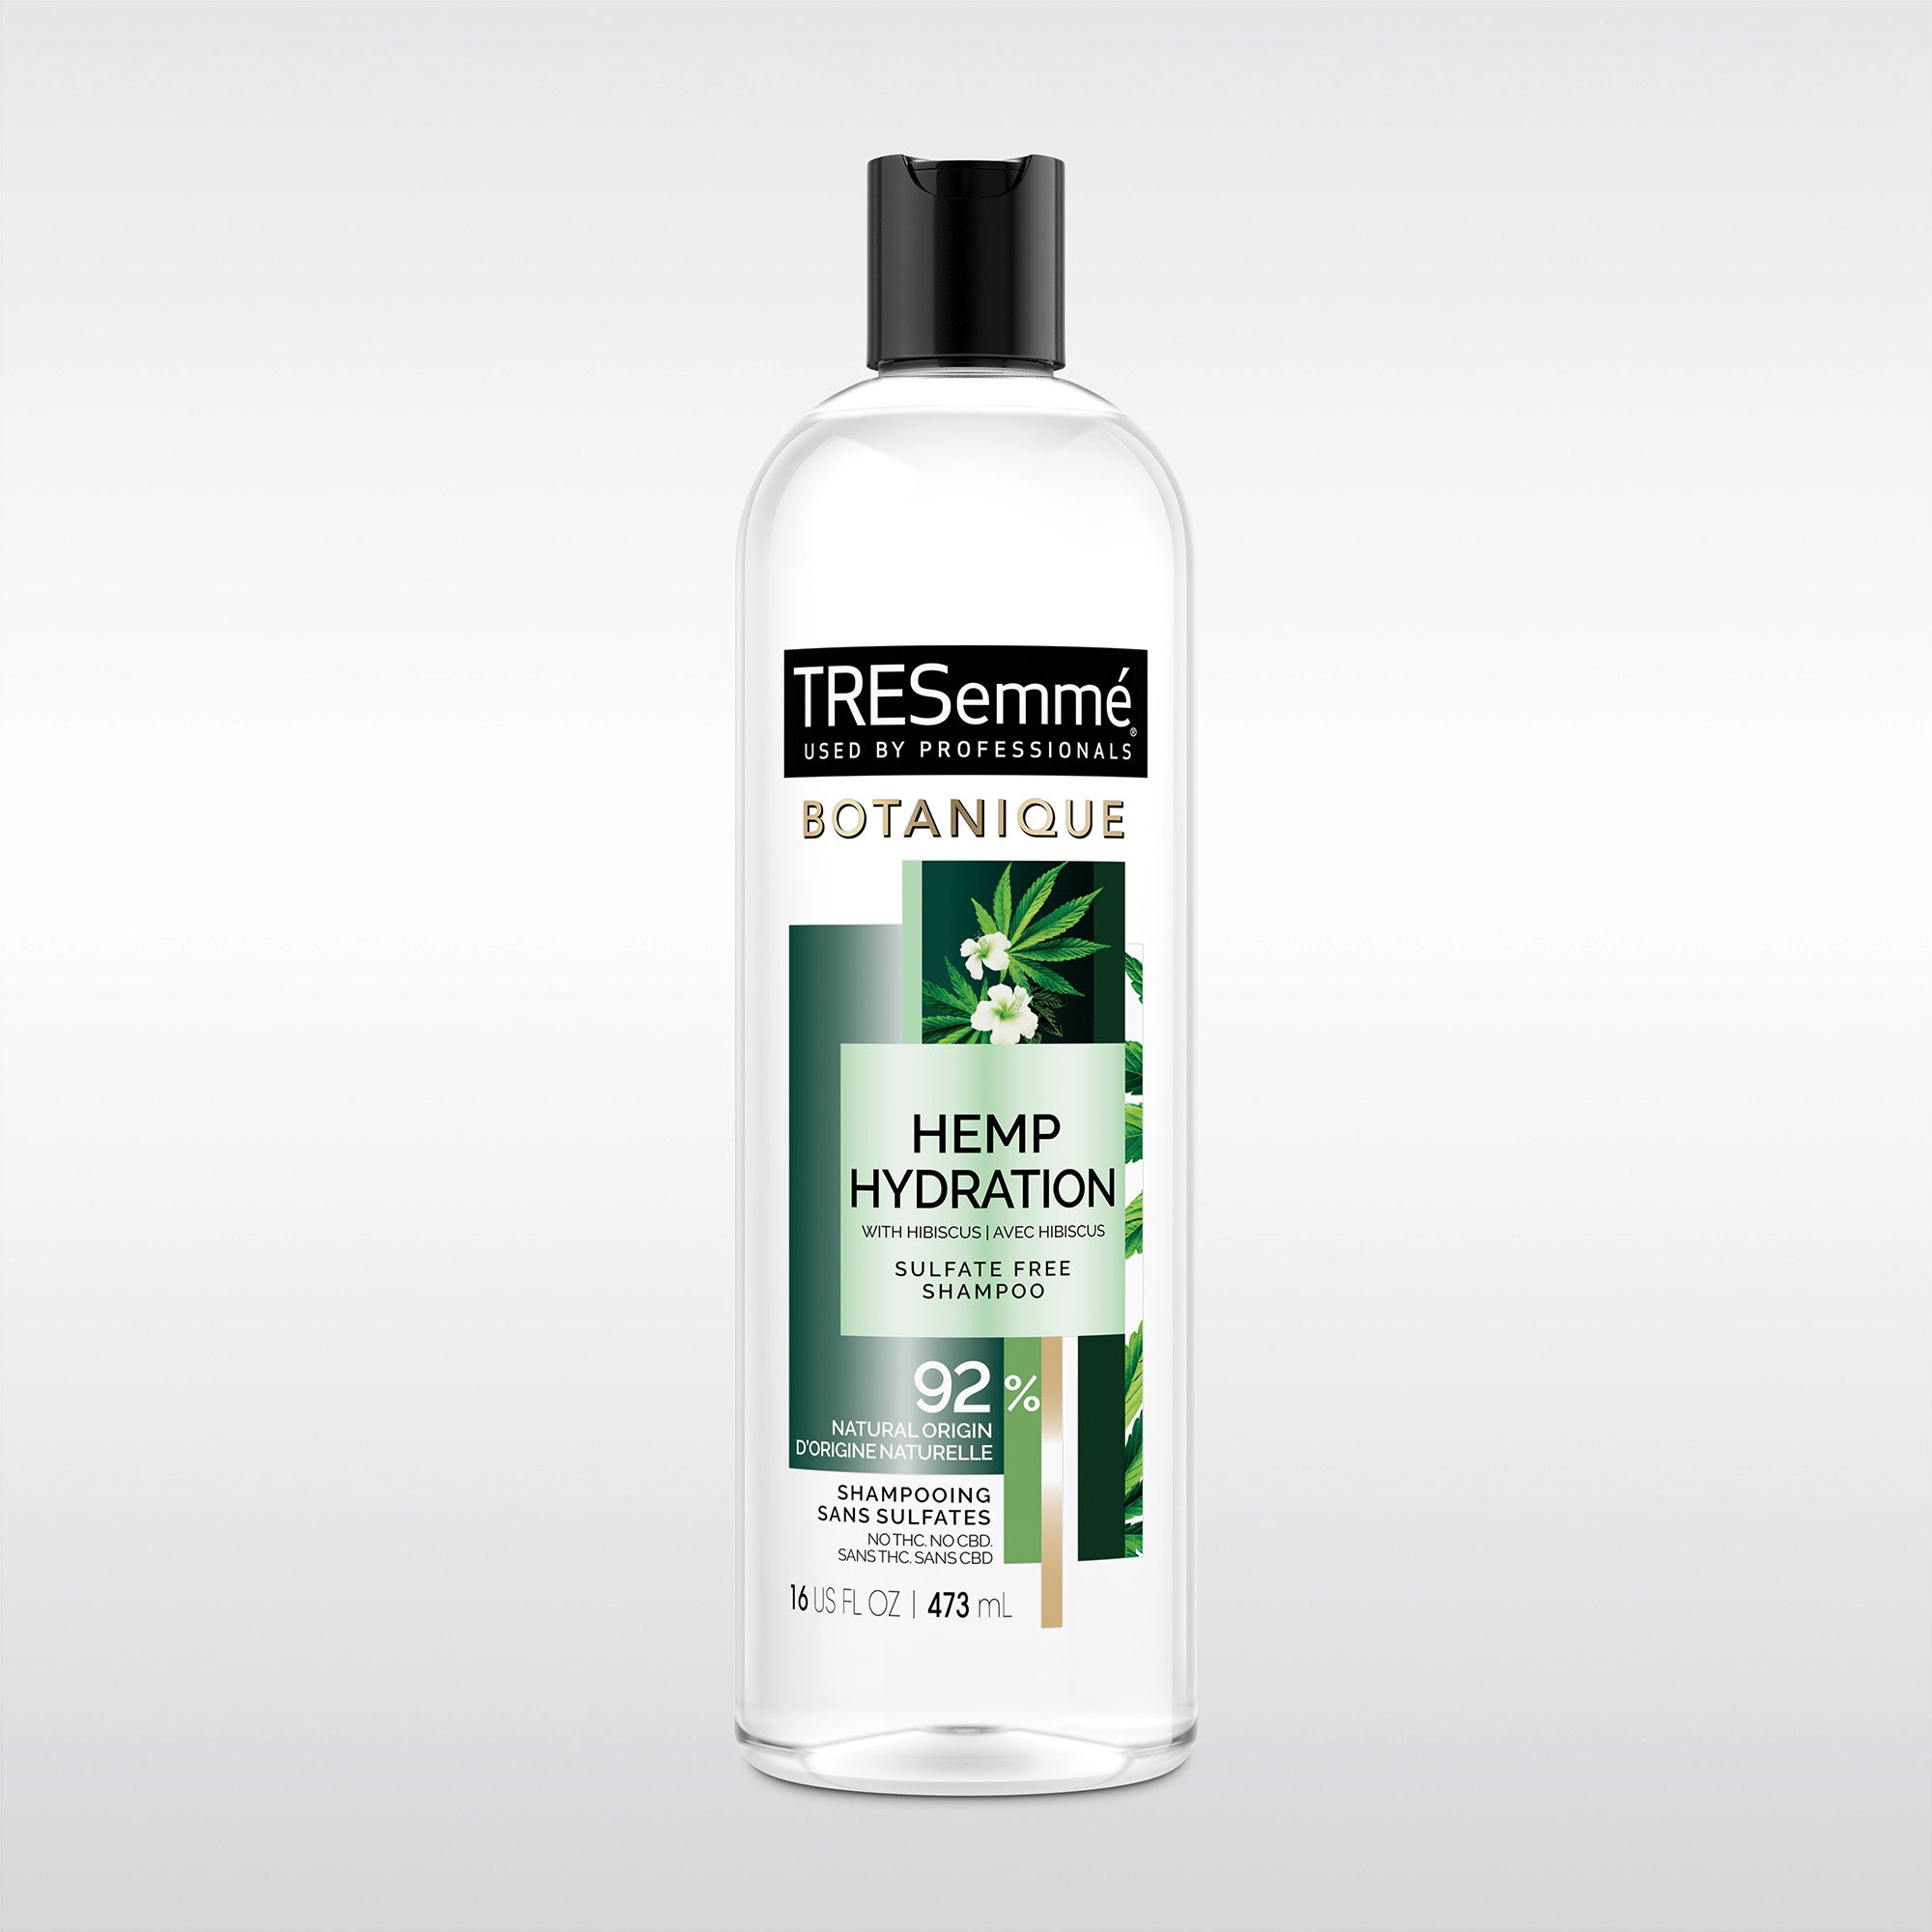 Tresemme Botanique Hemp Hydration Shampoo 473mL